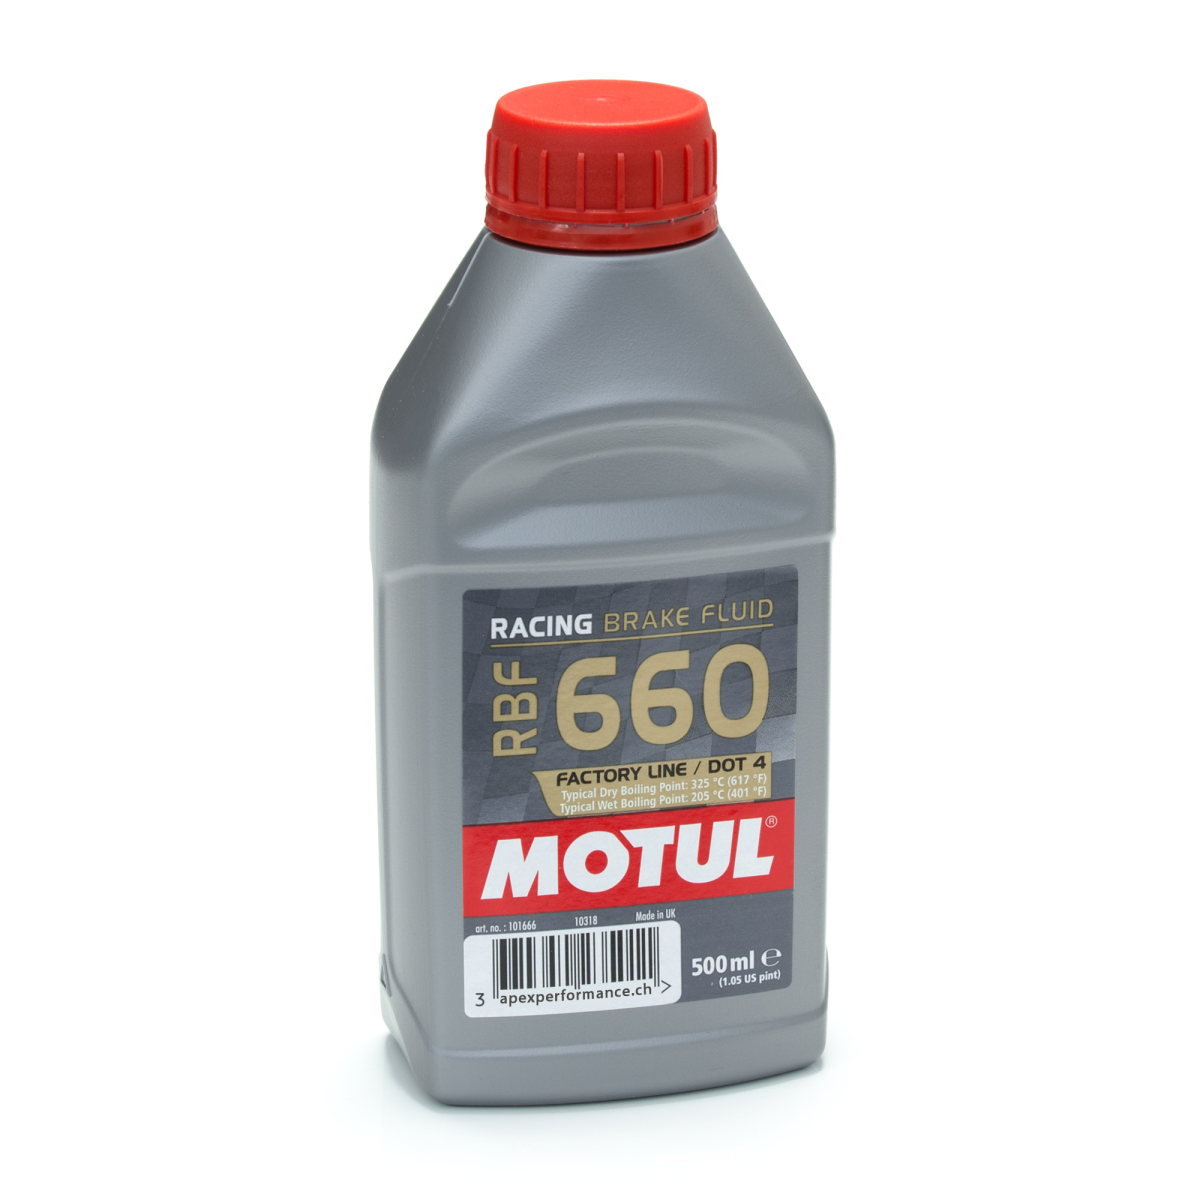 Motul RBF 660 - Liquide de frein haute température - Apex Performance